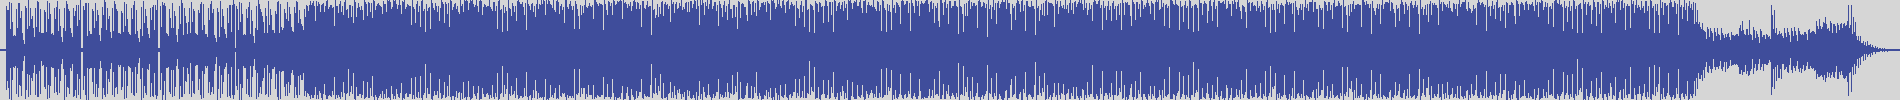 atomic_recordings [AR003] Prism Boar - Acre Tofu [Chigago Crews's House Mix] audio wave form